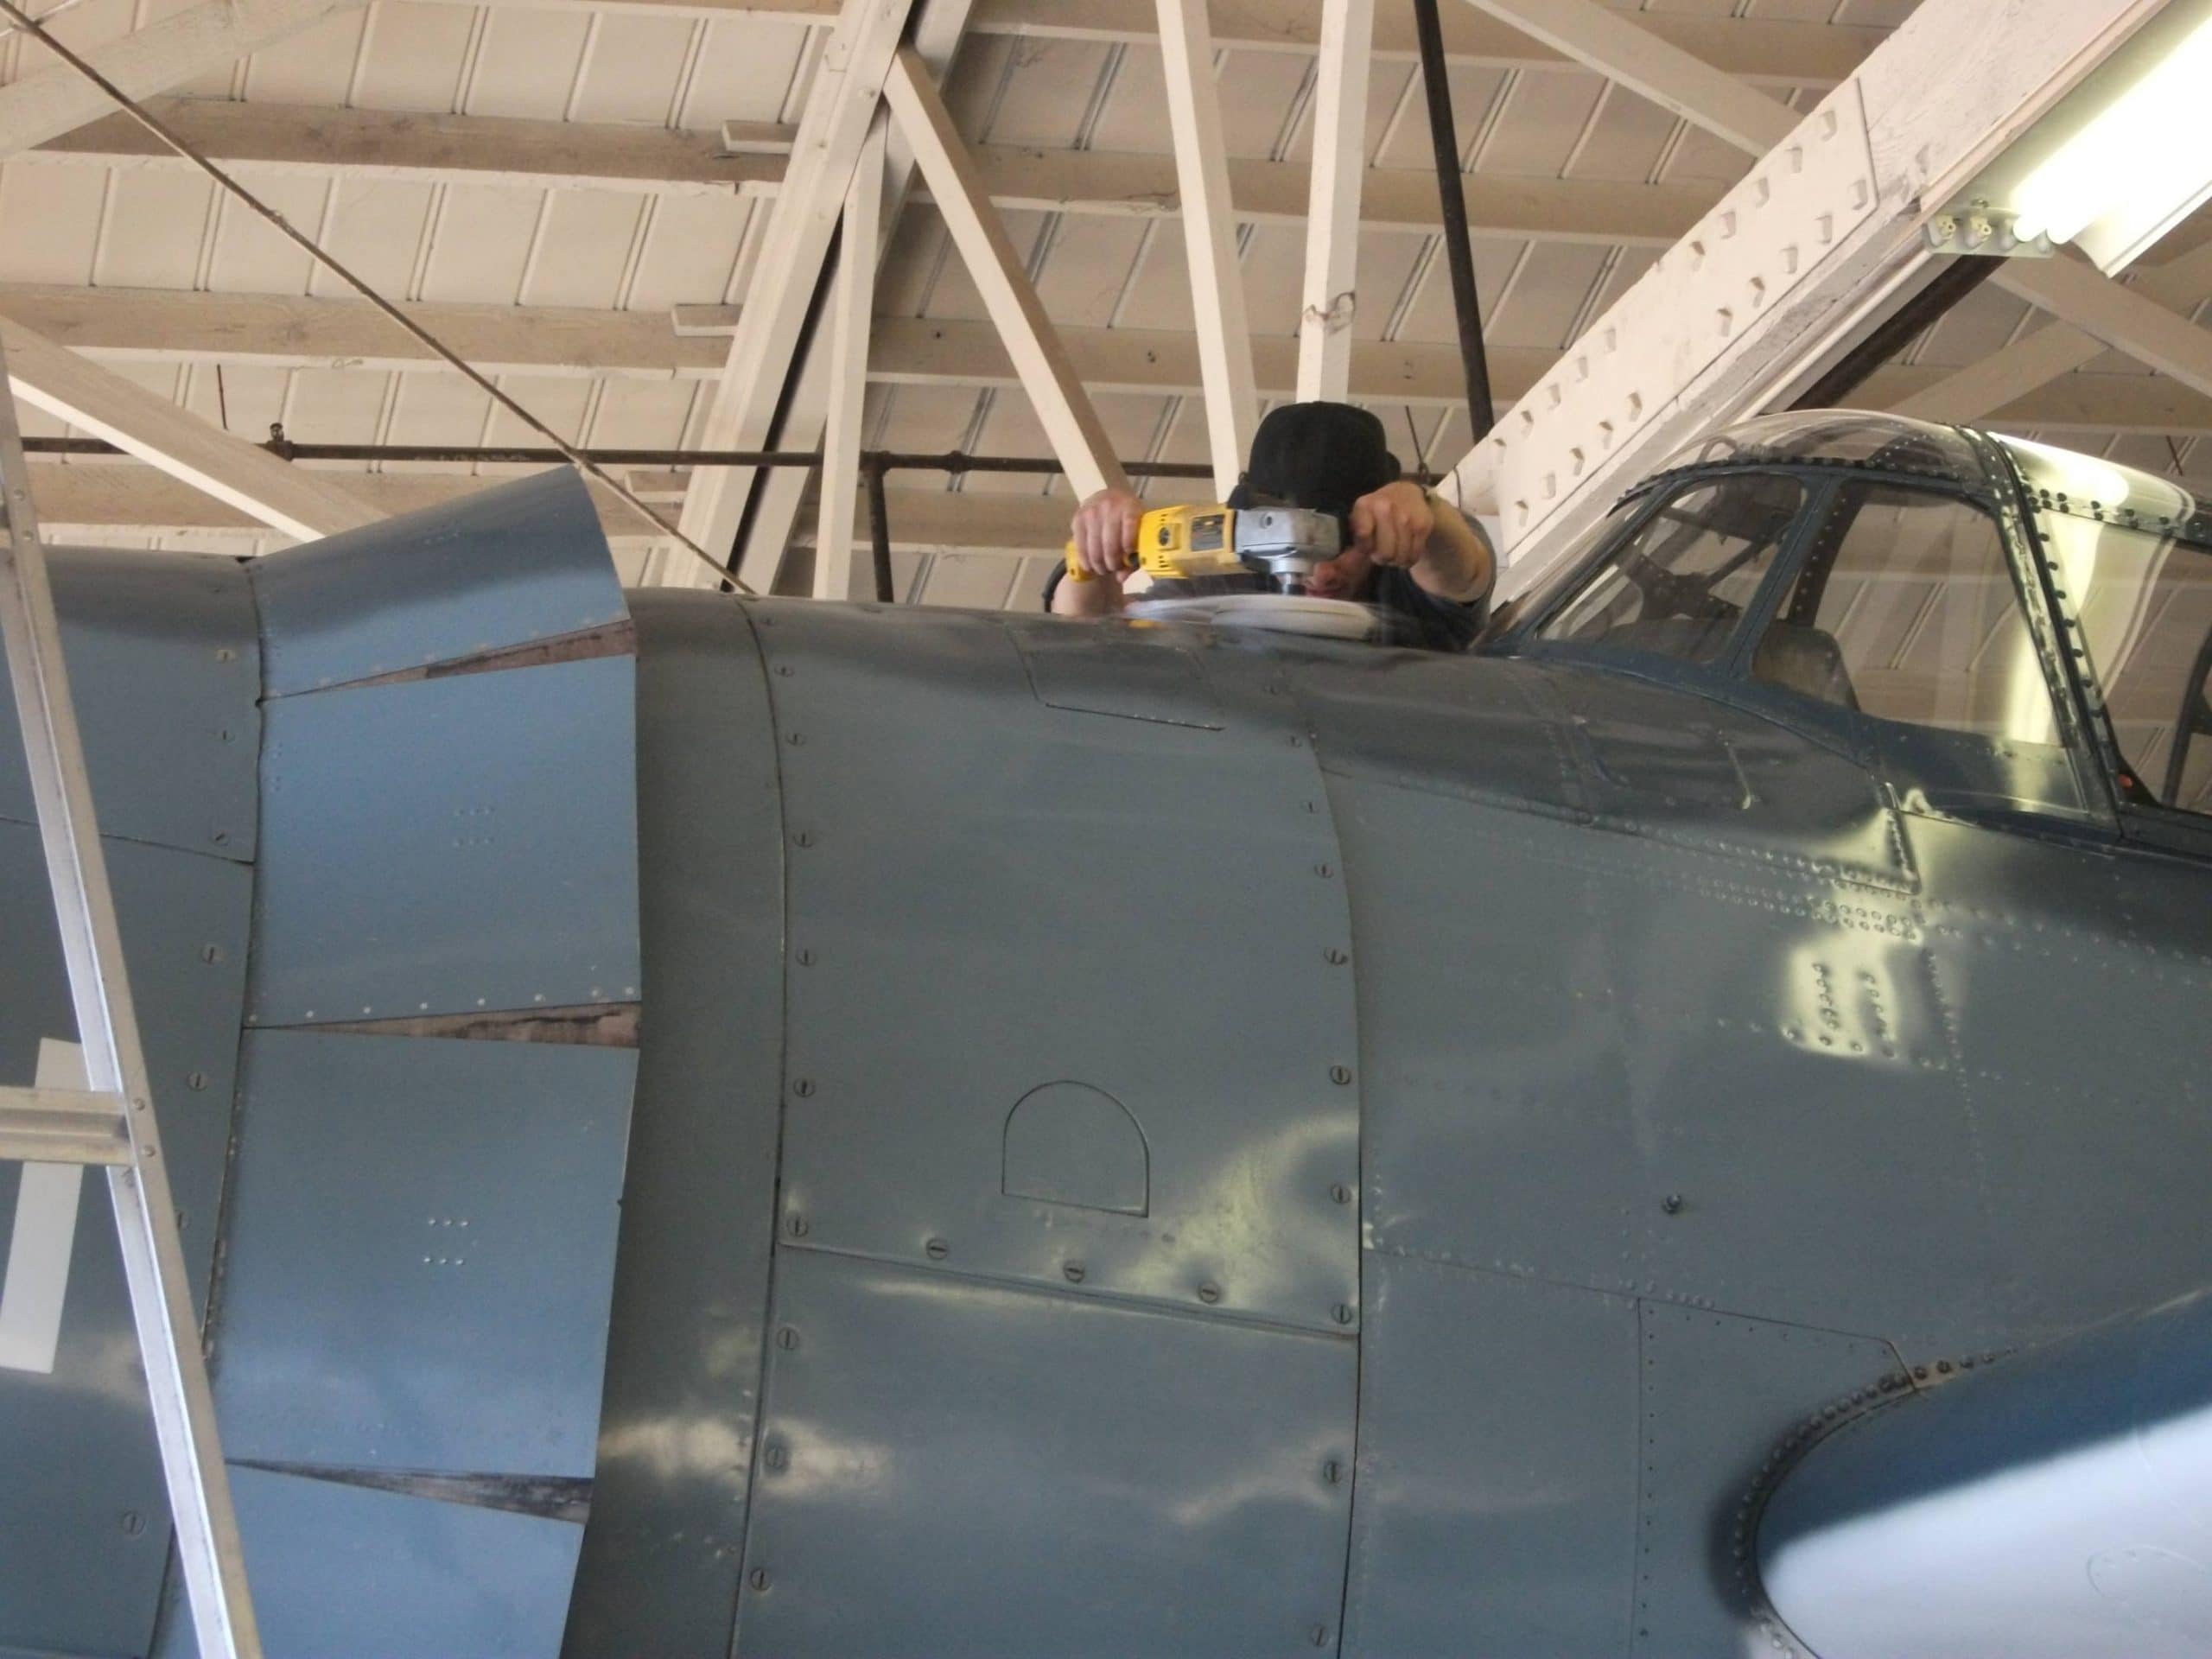 Classic war bird aircraft maintenance and detailing in Arizona